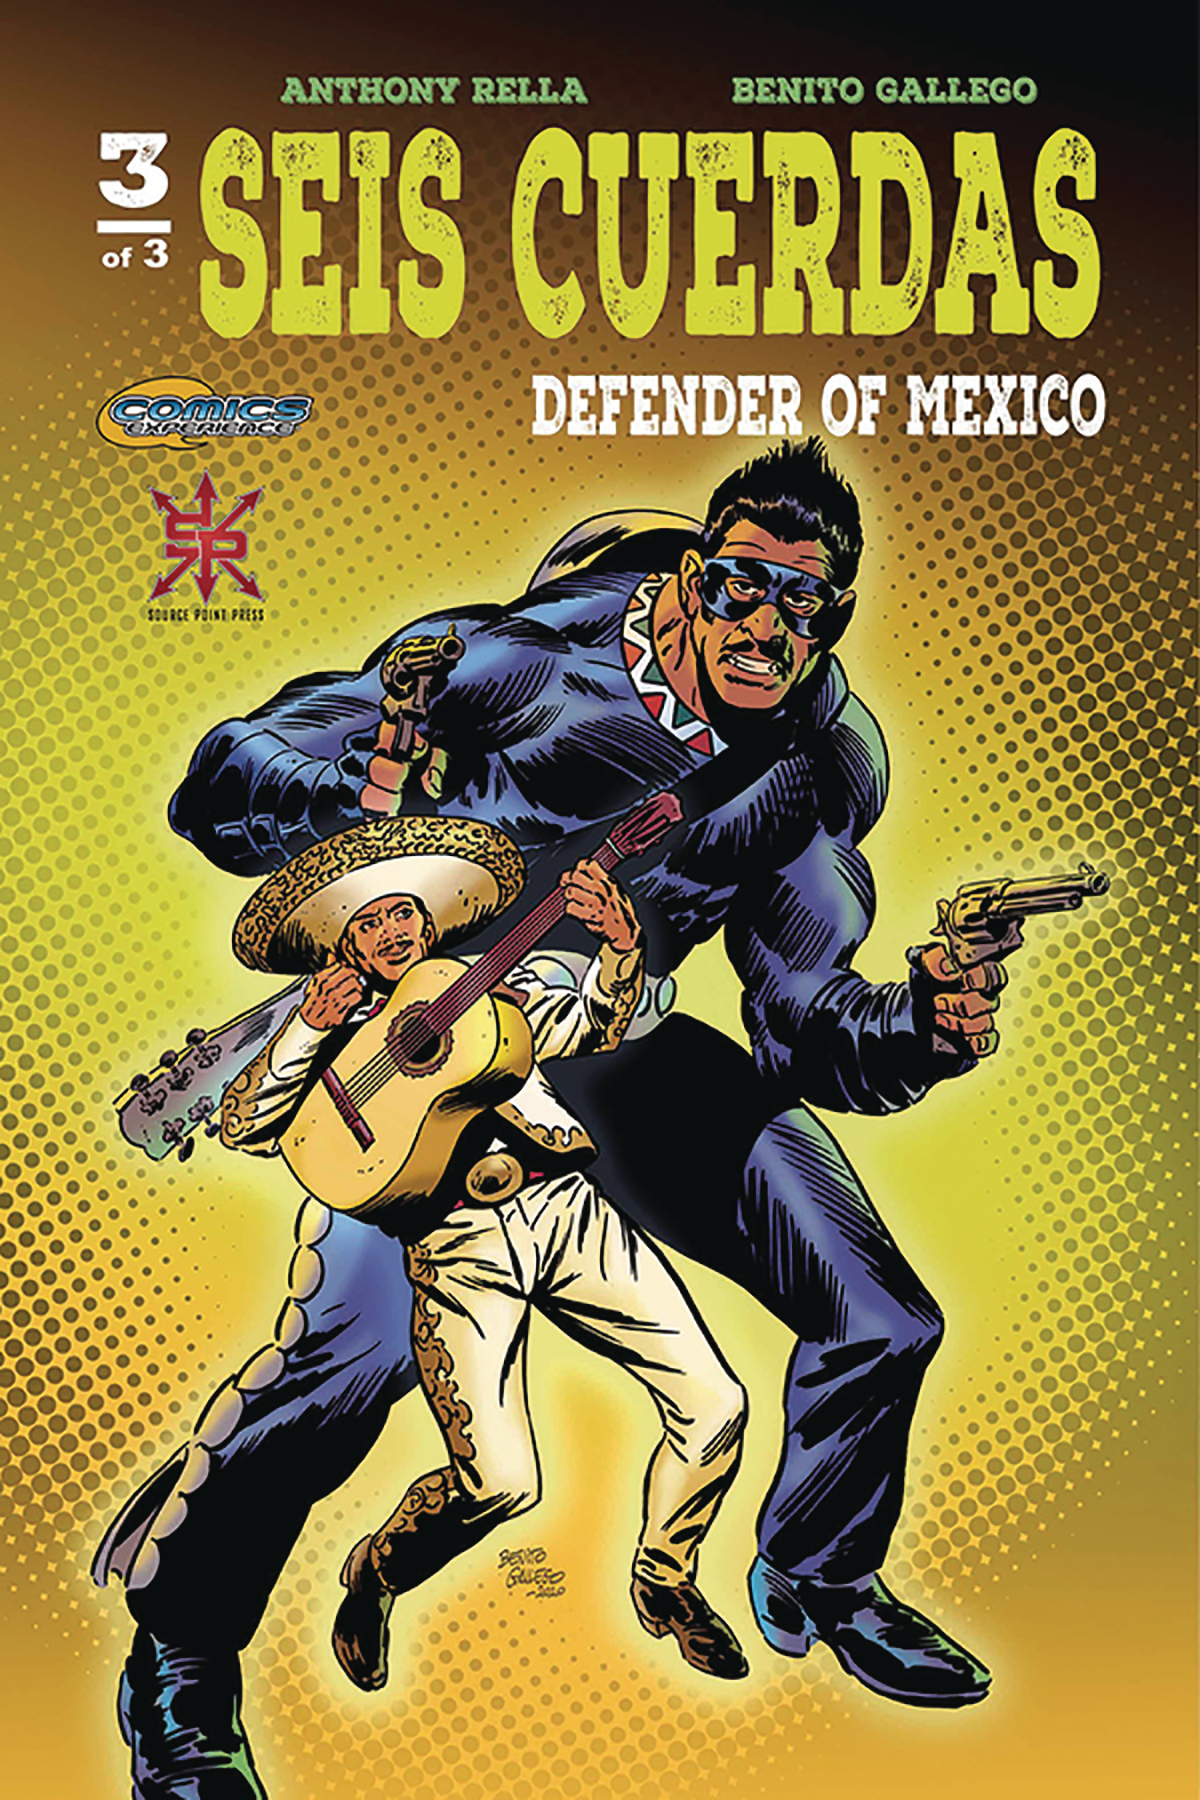 Seis Cuerdas Defender of Mexico #3 (Mature) (Of 3)